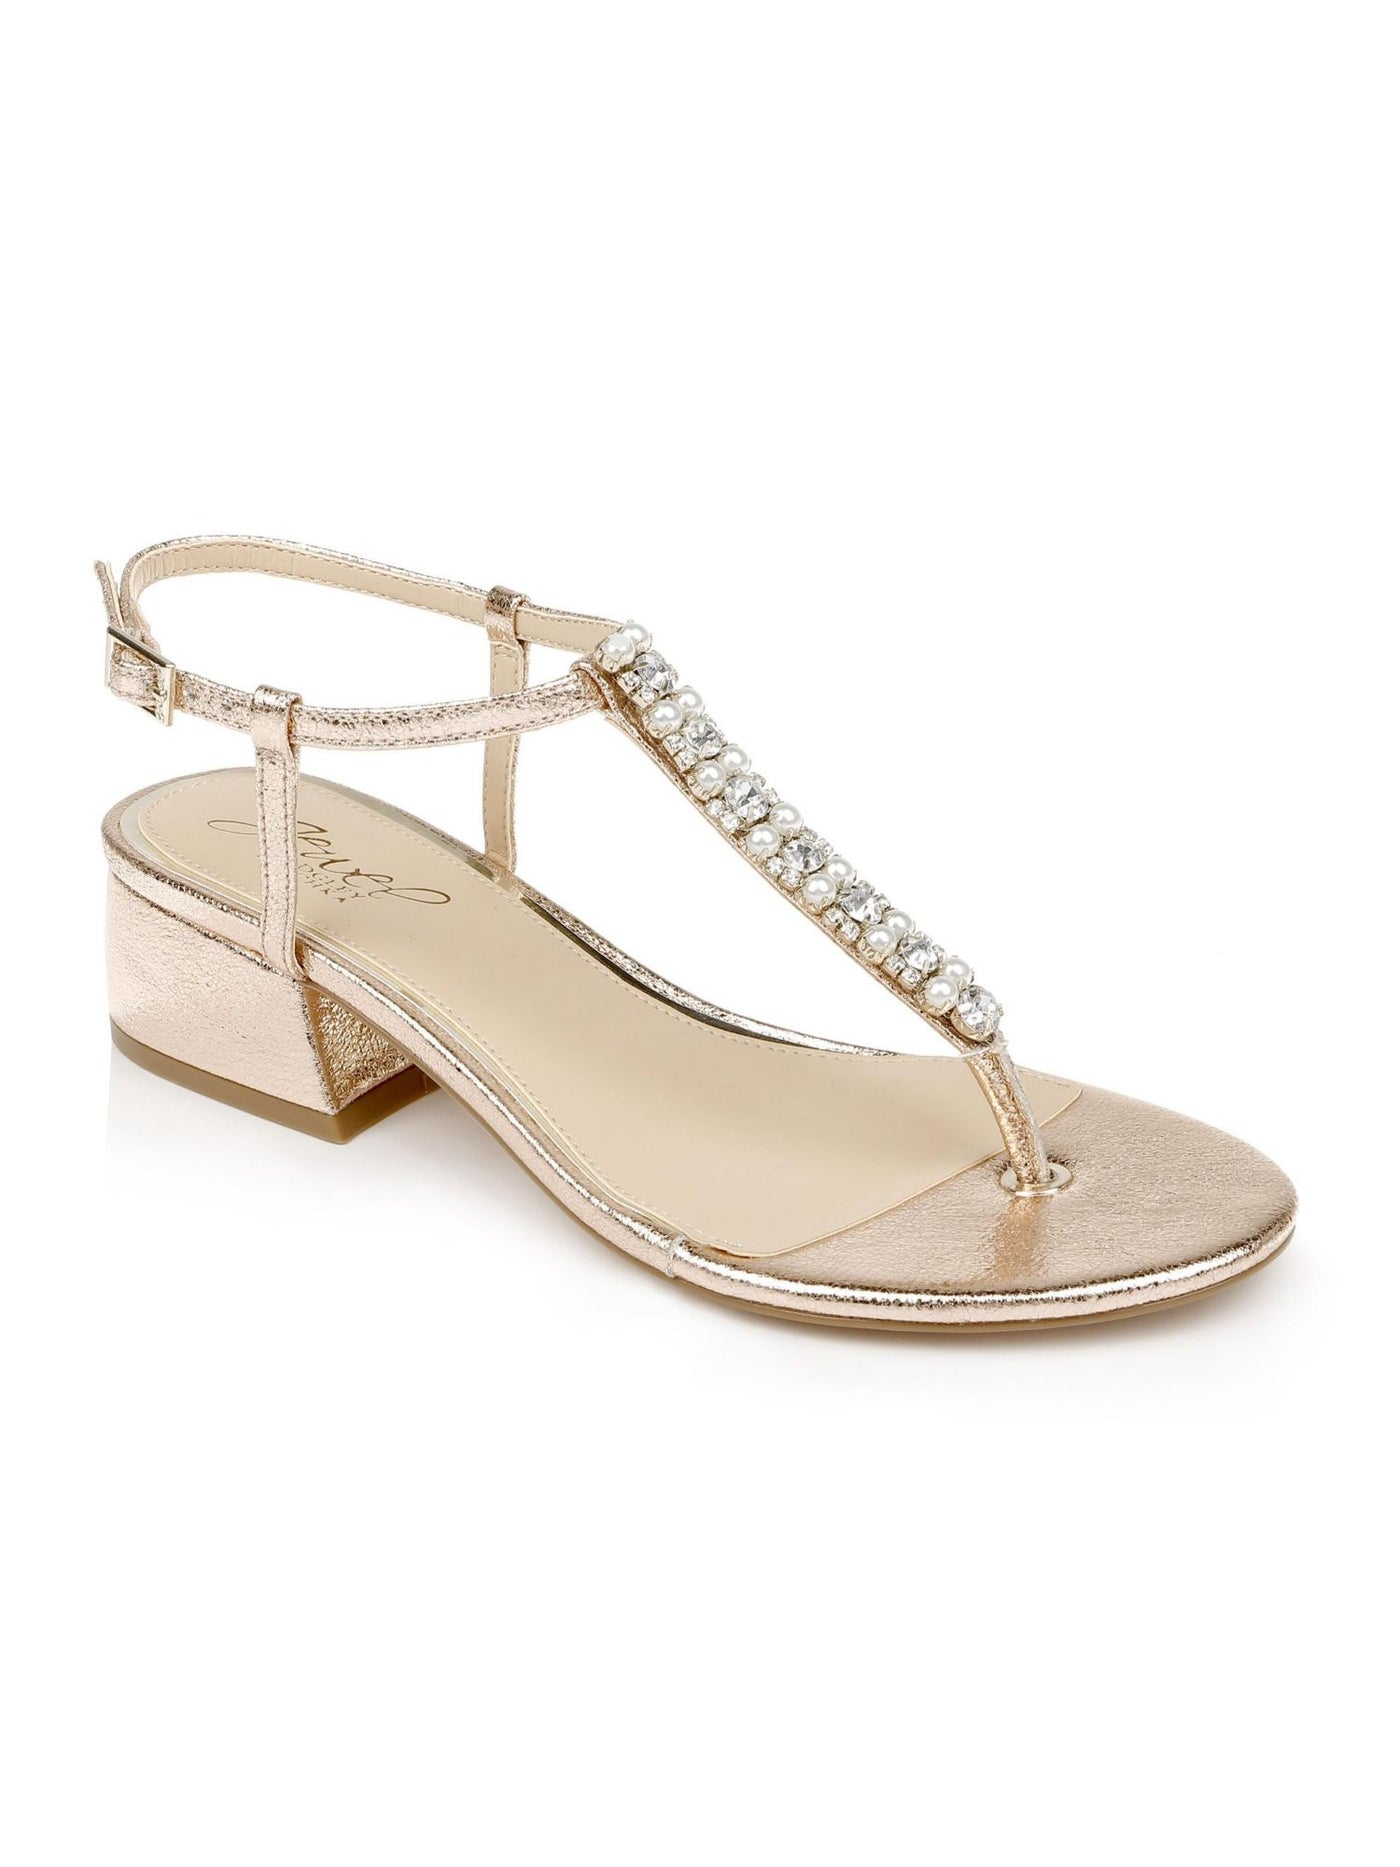 JEWEL BADGLEY MISCHKA Womens Gold Embellished T-Strap Dasha Round Toe Block Heel Buckle Dress Thong Sandals Shoes 11 M